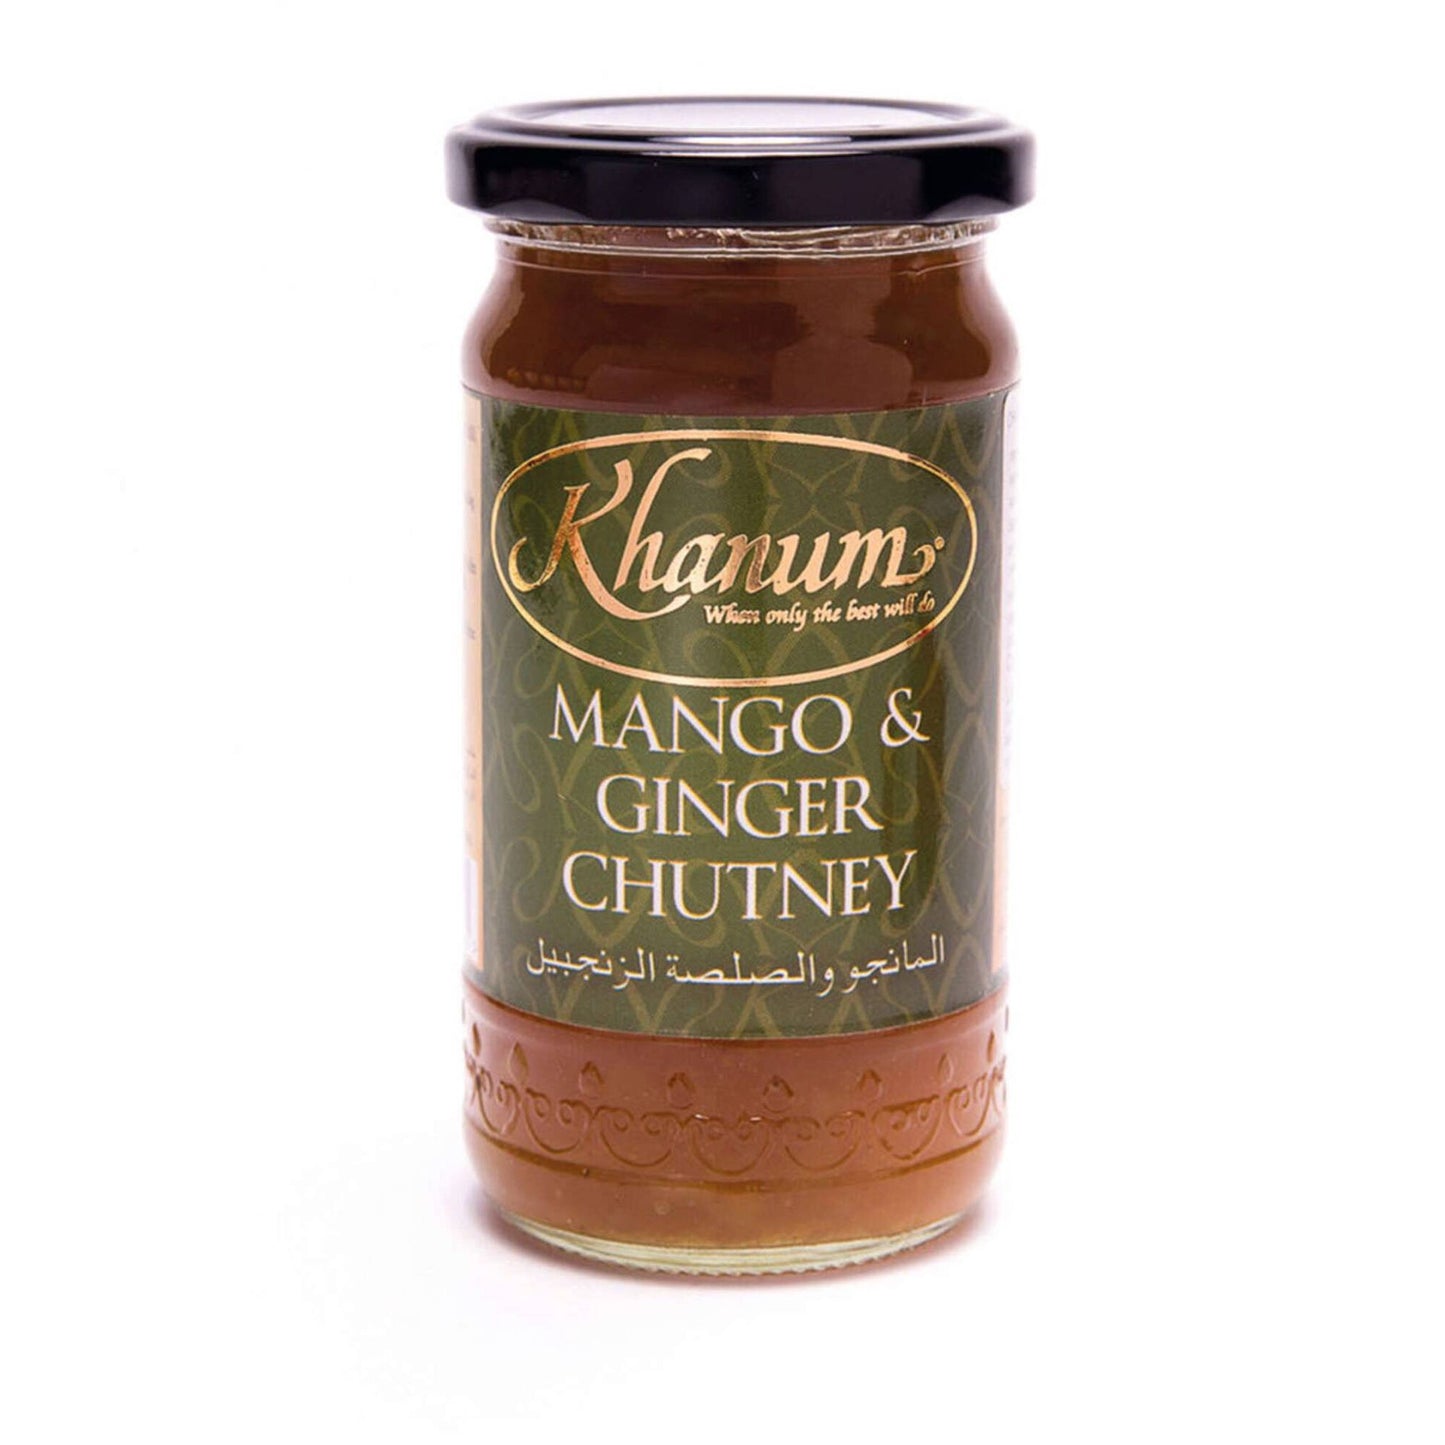 Mango and Ginger Chutney Sauce Khanum 350g